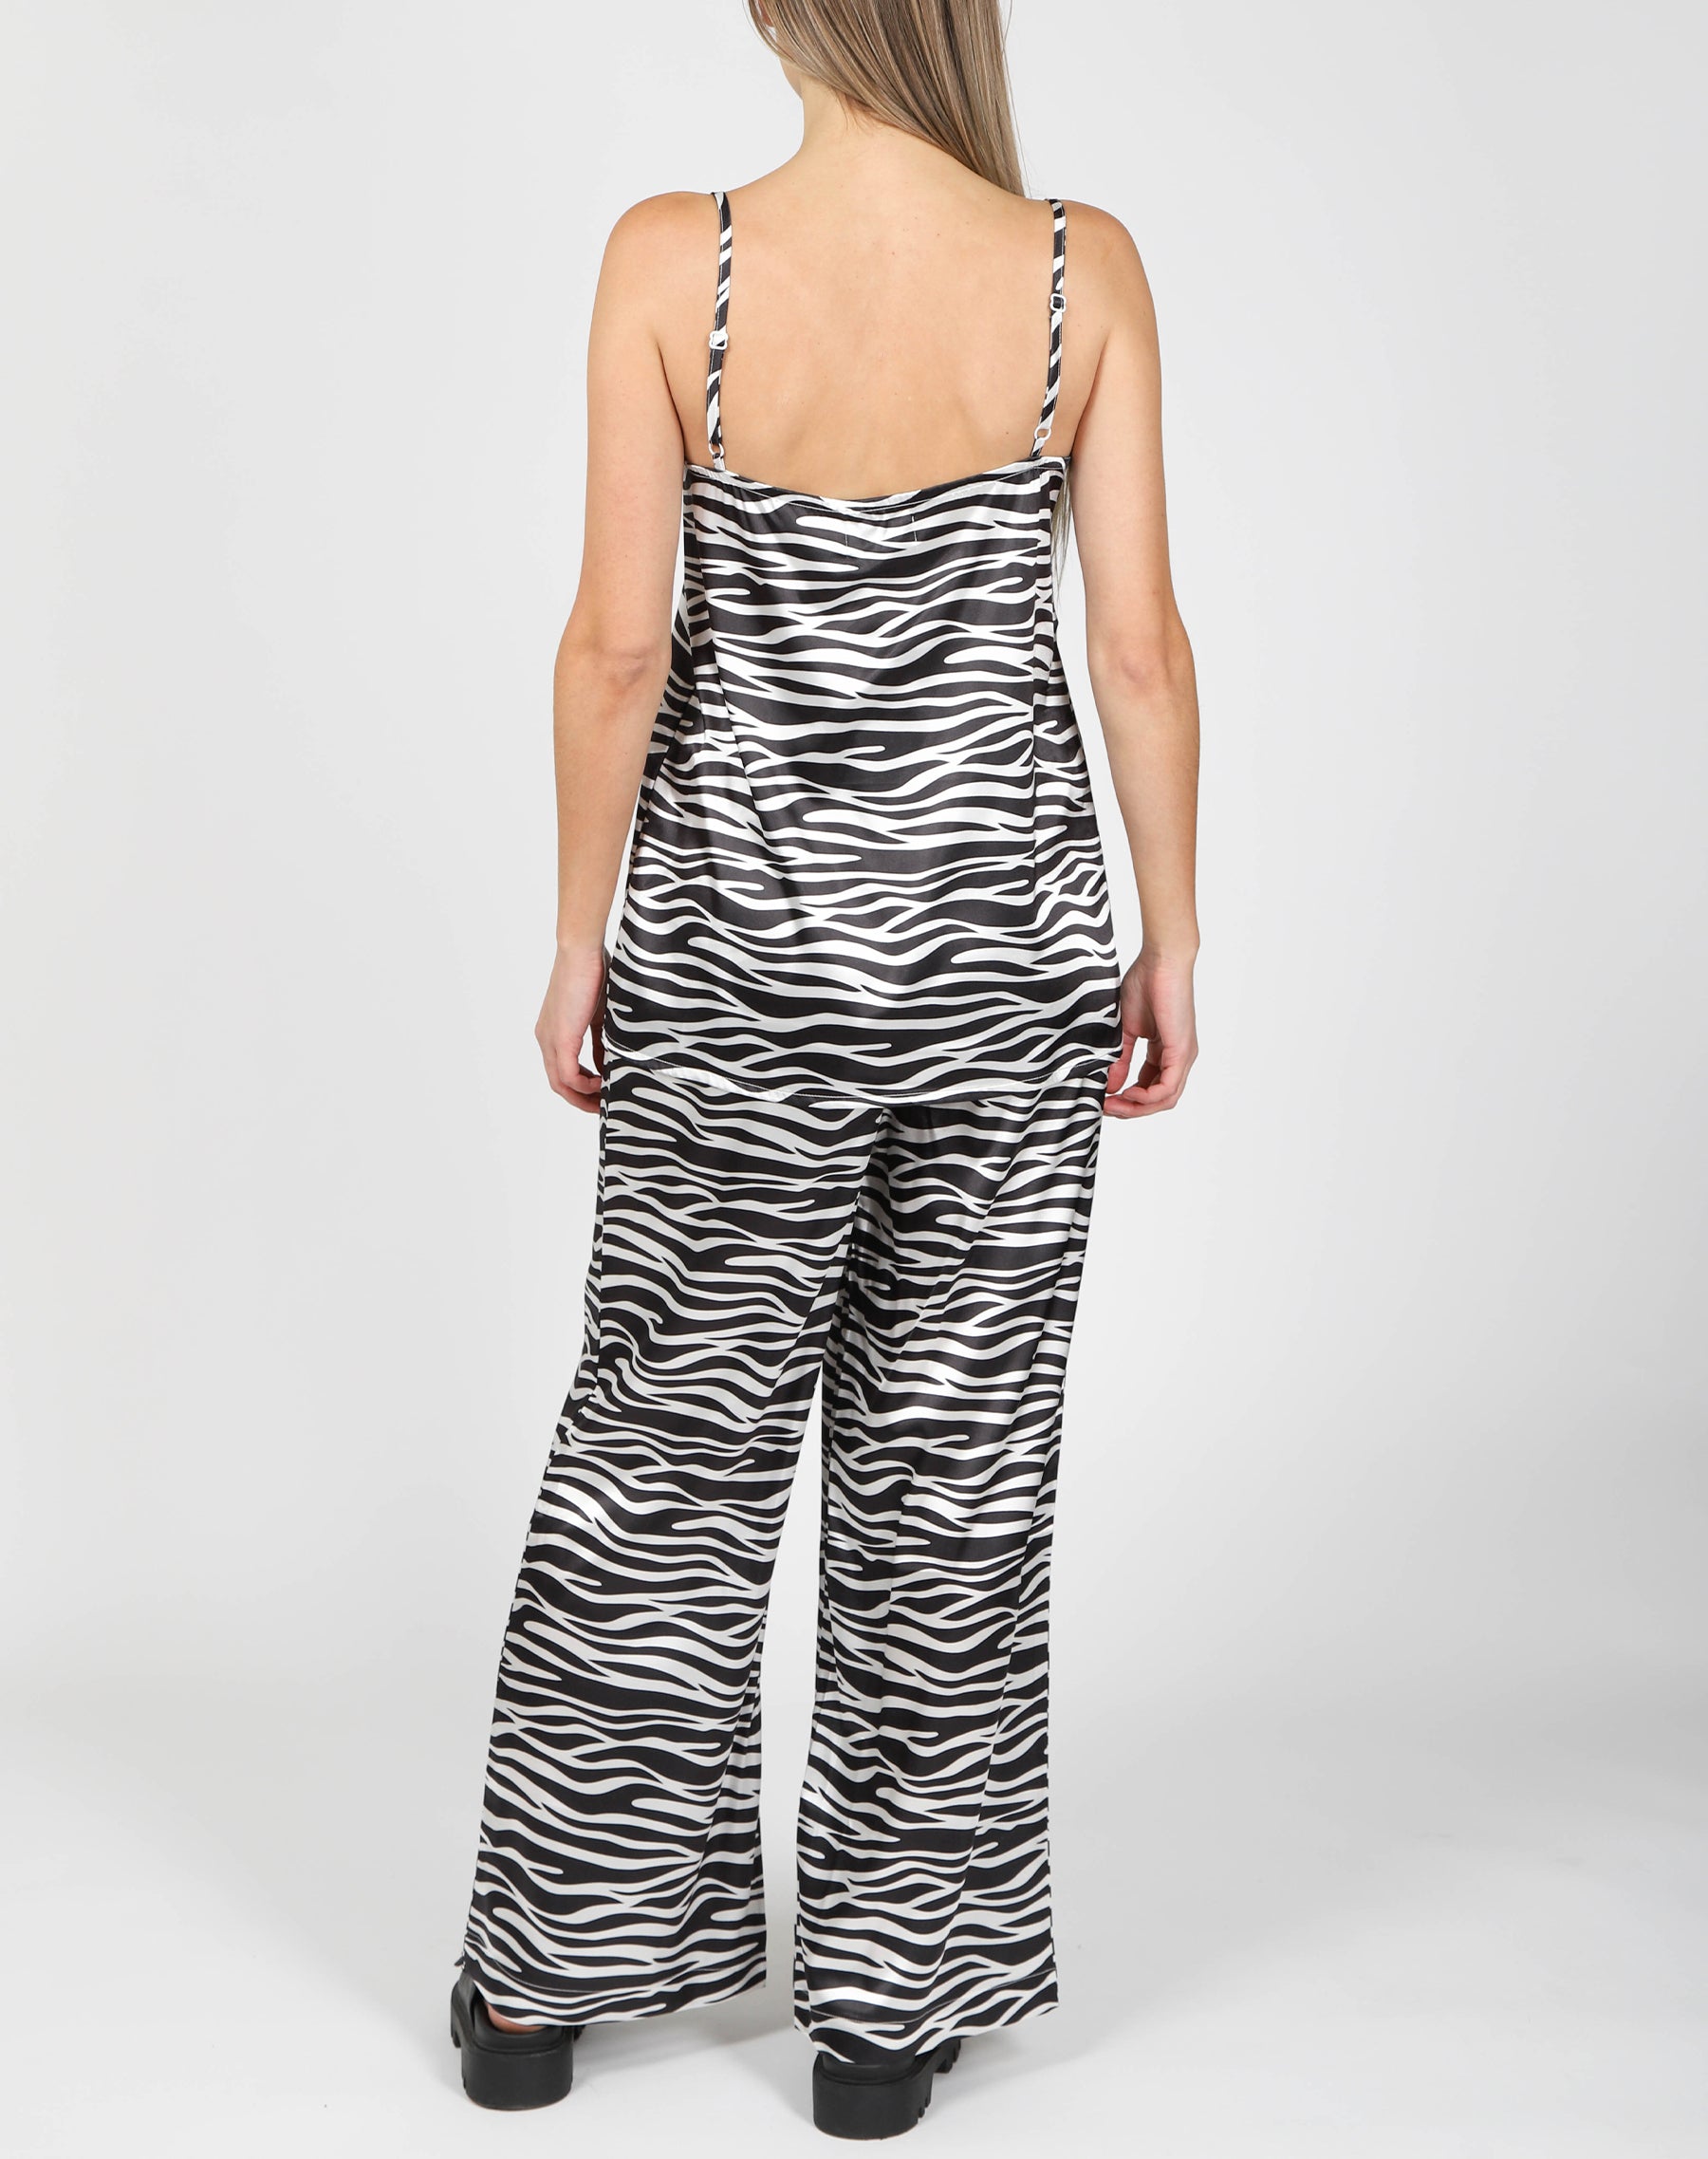 The "DIANA" Silk Camisole | Zebra